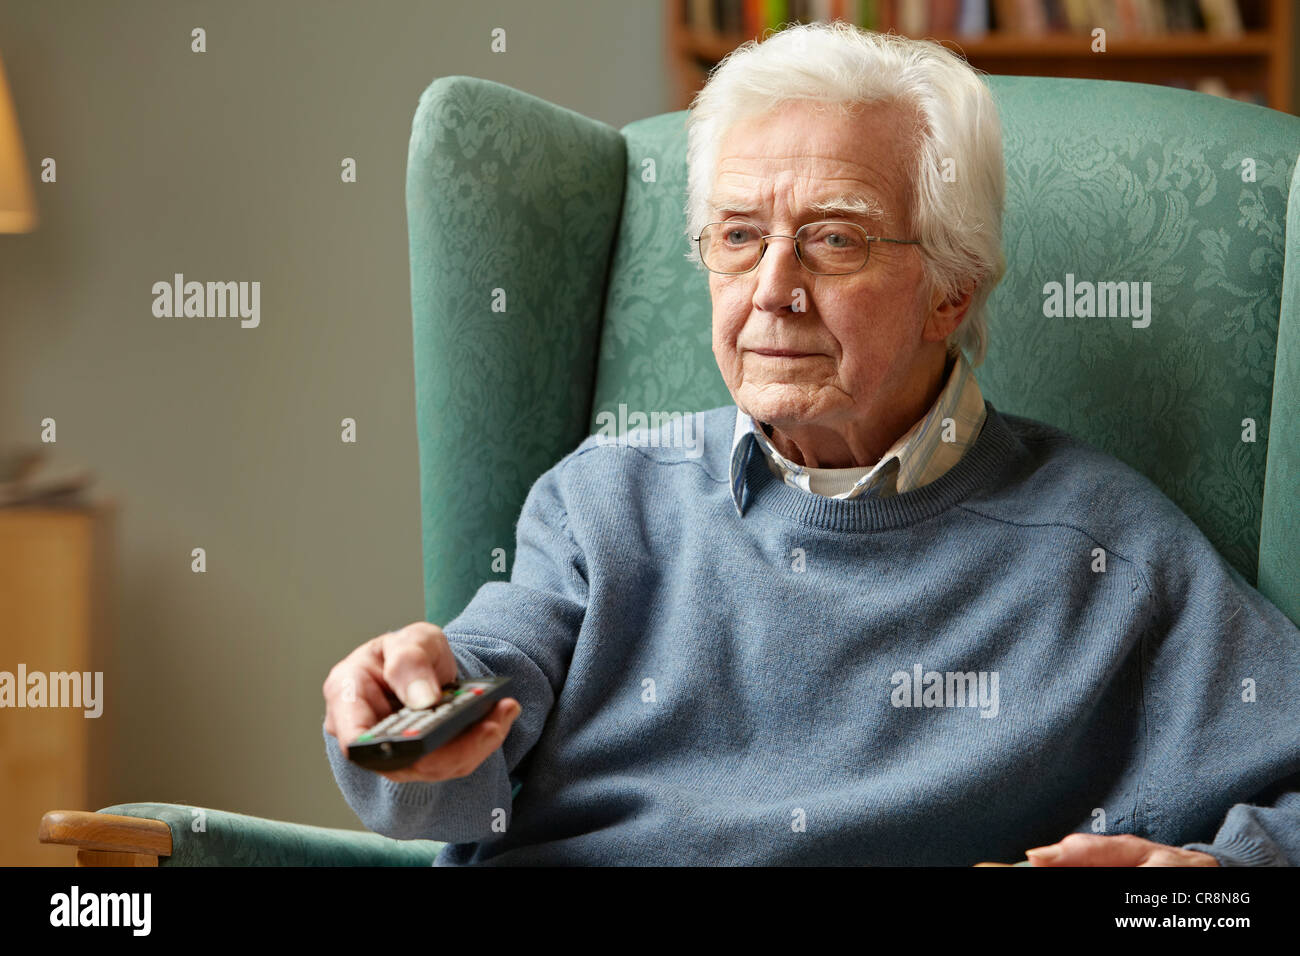 Senior man using remote control Stock Photo